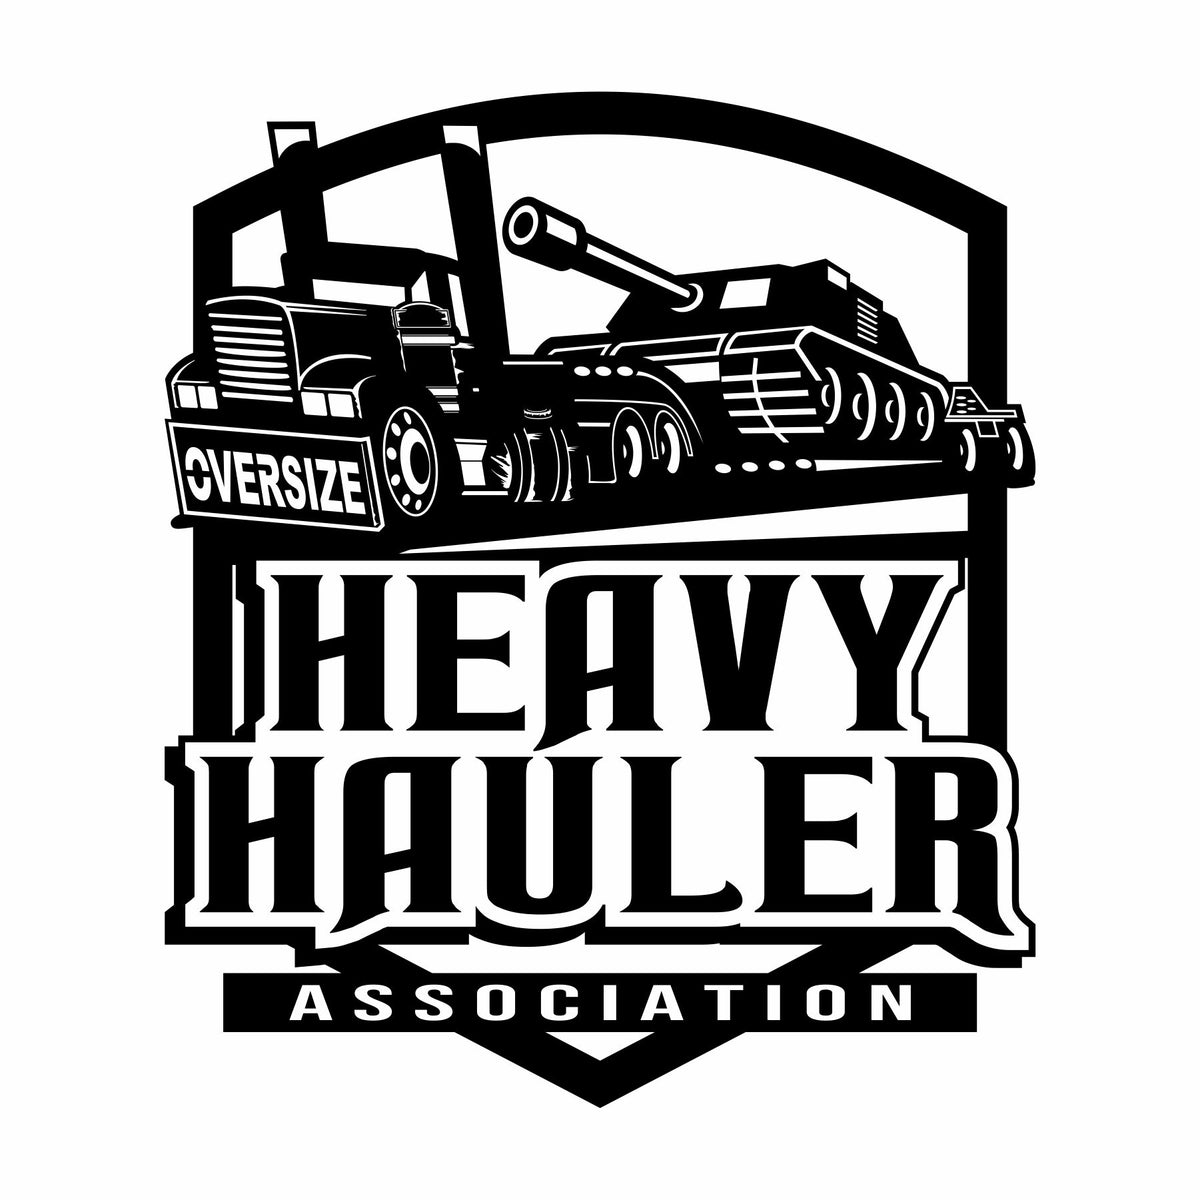 Heavy Hauler Association - Lowboy - Vinyl Decal - Free Shipping